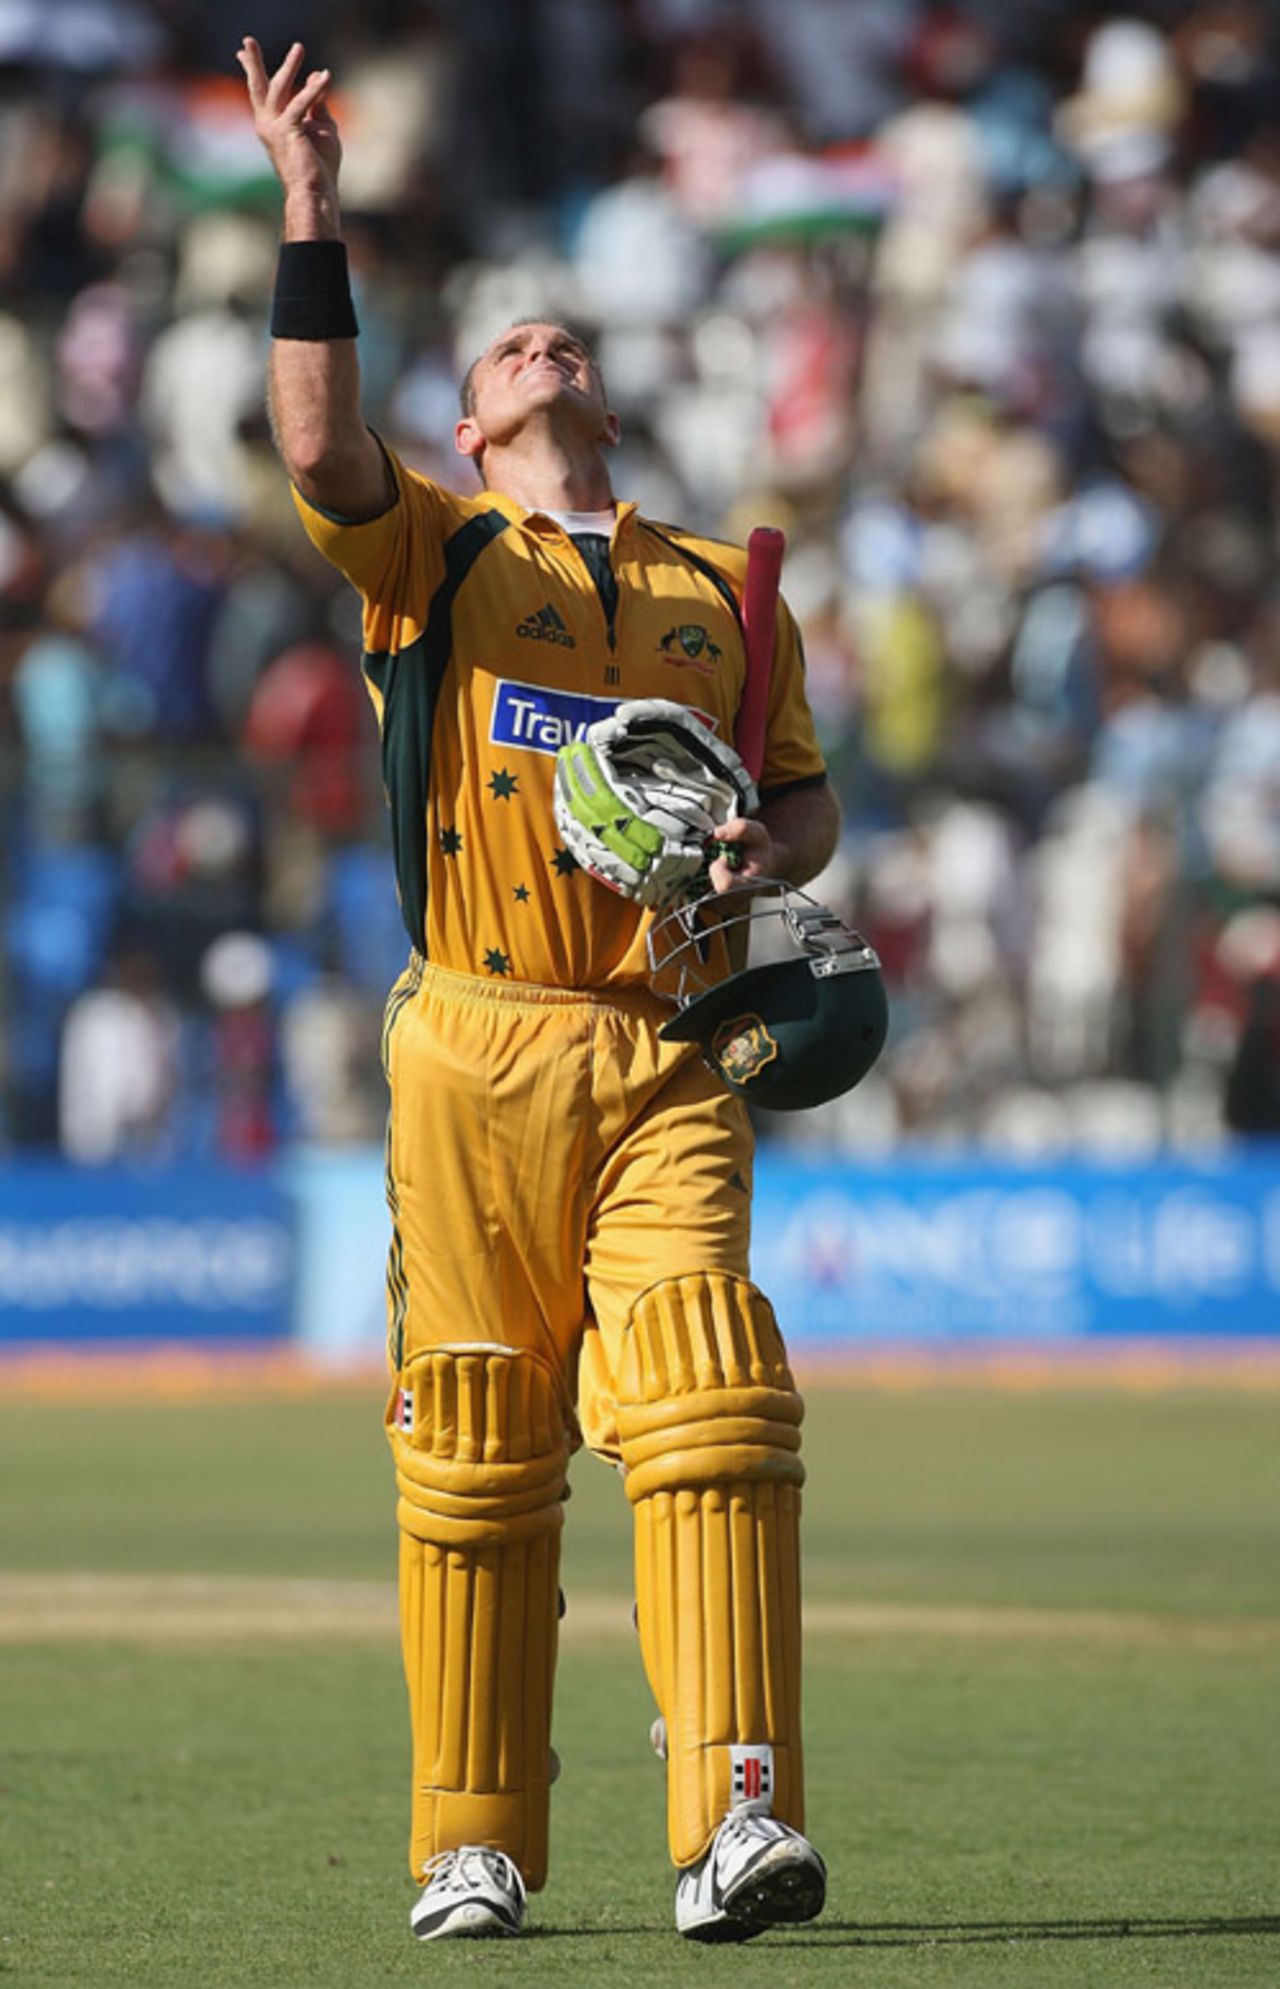 Matthew Hayden looks toward the sky after his dismissal, India v Australia, 1st ODI, Bangalore, September 29, 2007